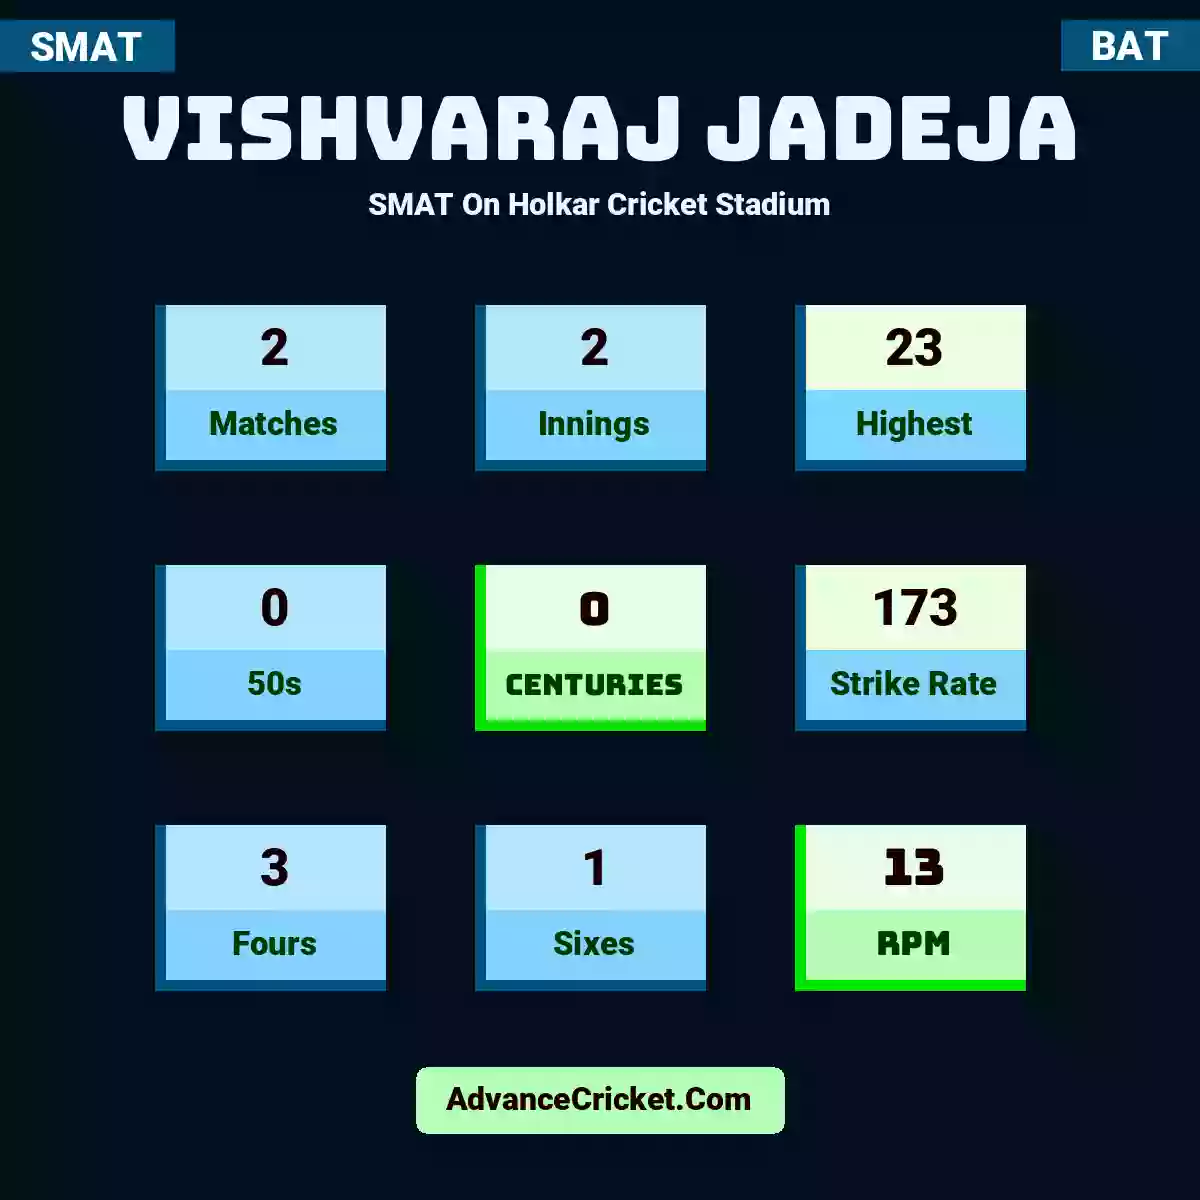 Vishvaraj Jadeja SMAT  On Holkar Cricket Stadium, Vishvaraj Jadeja played 2 matches, scored 23 runs as highest, 0 half-centuries, and 0 centuries, with a strike rate of 173. V.Jadeja hit 3 fours and 1 sixes, with an RPM of 13.